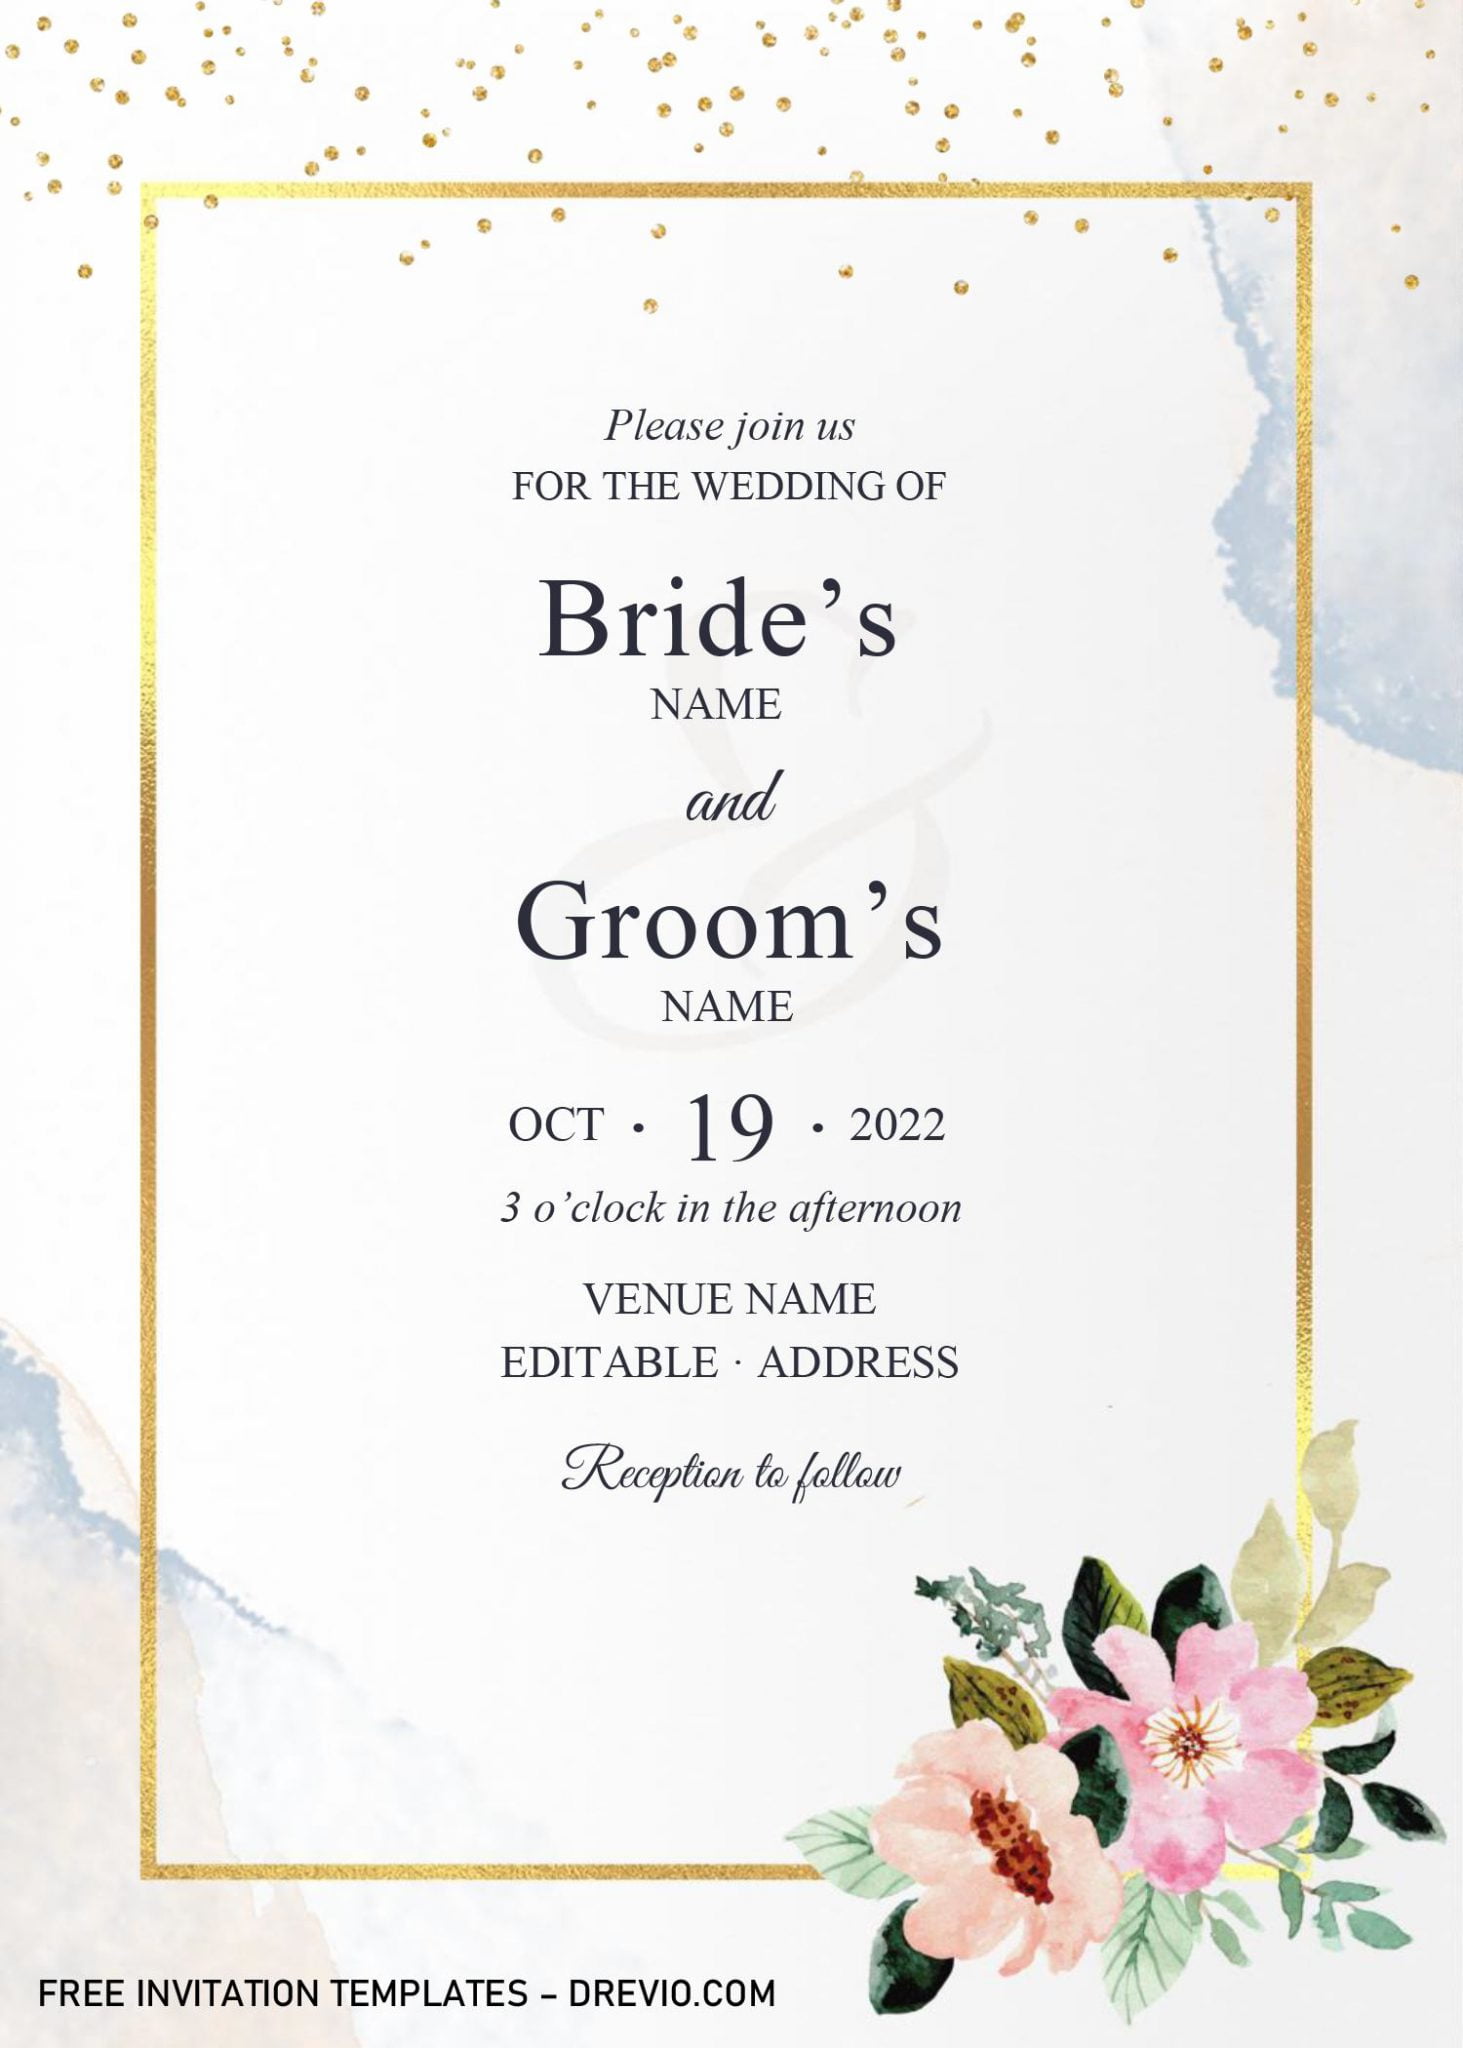 golden-frame-wedding-invitation-templates-editable-with-microsoft